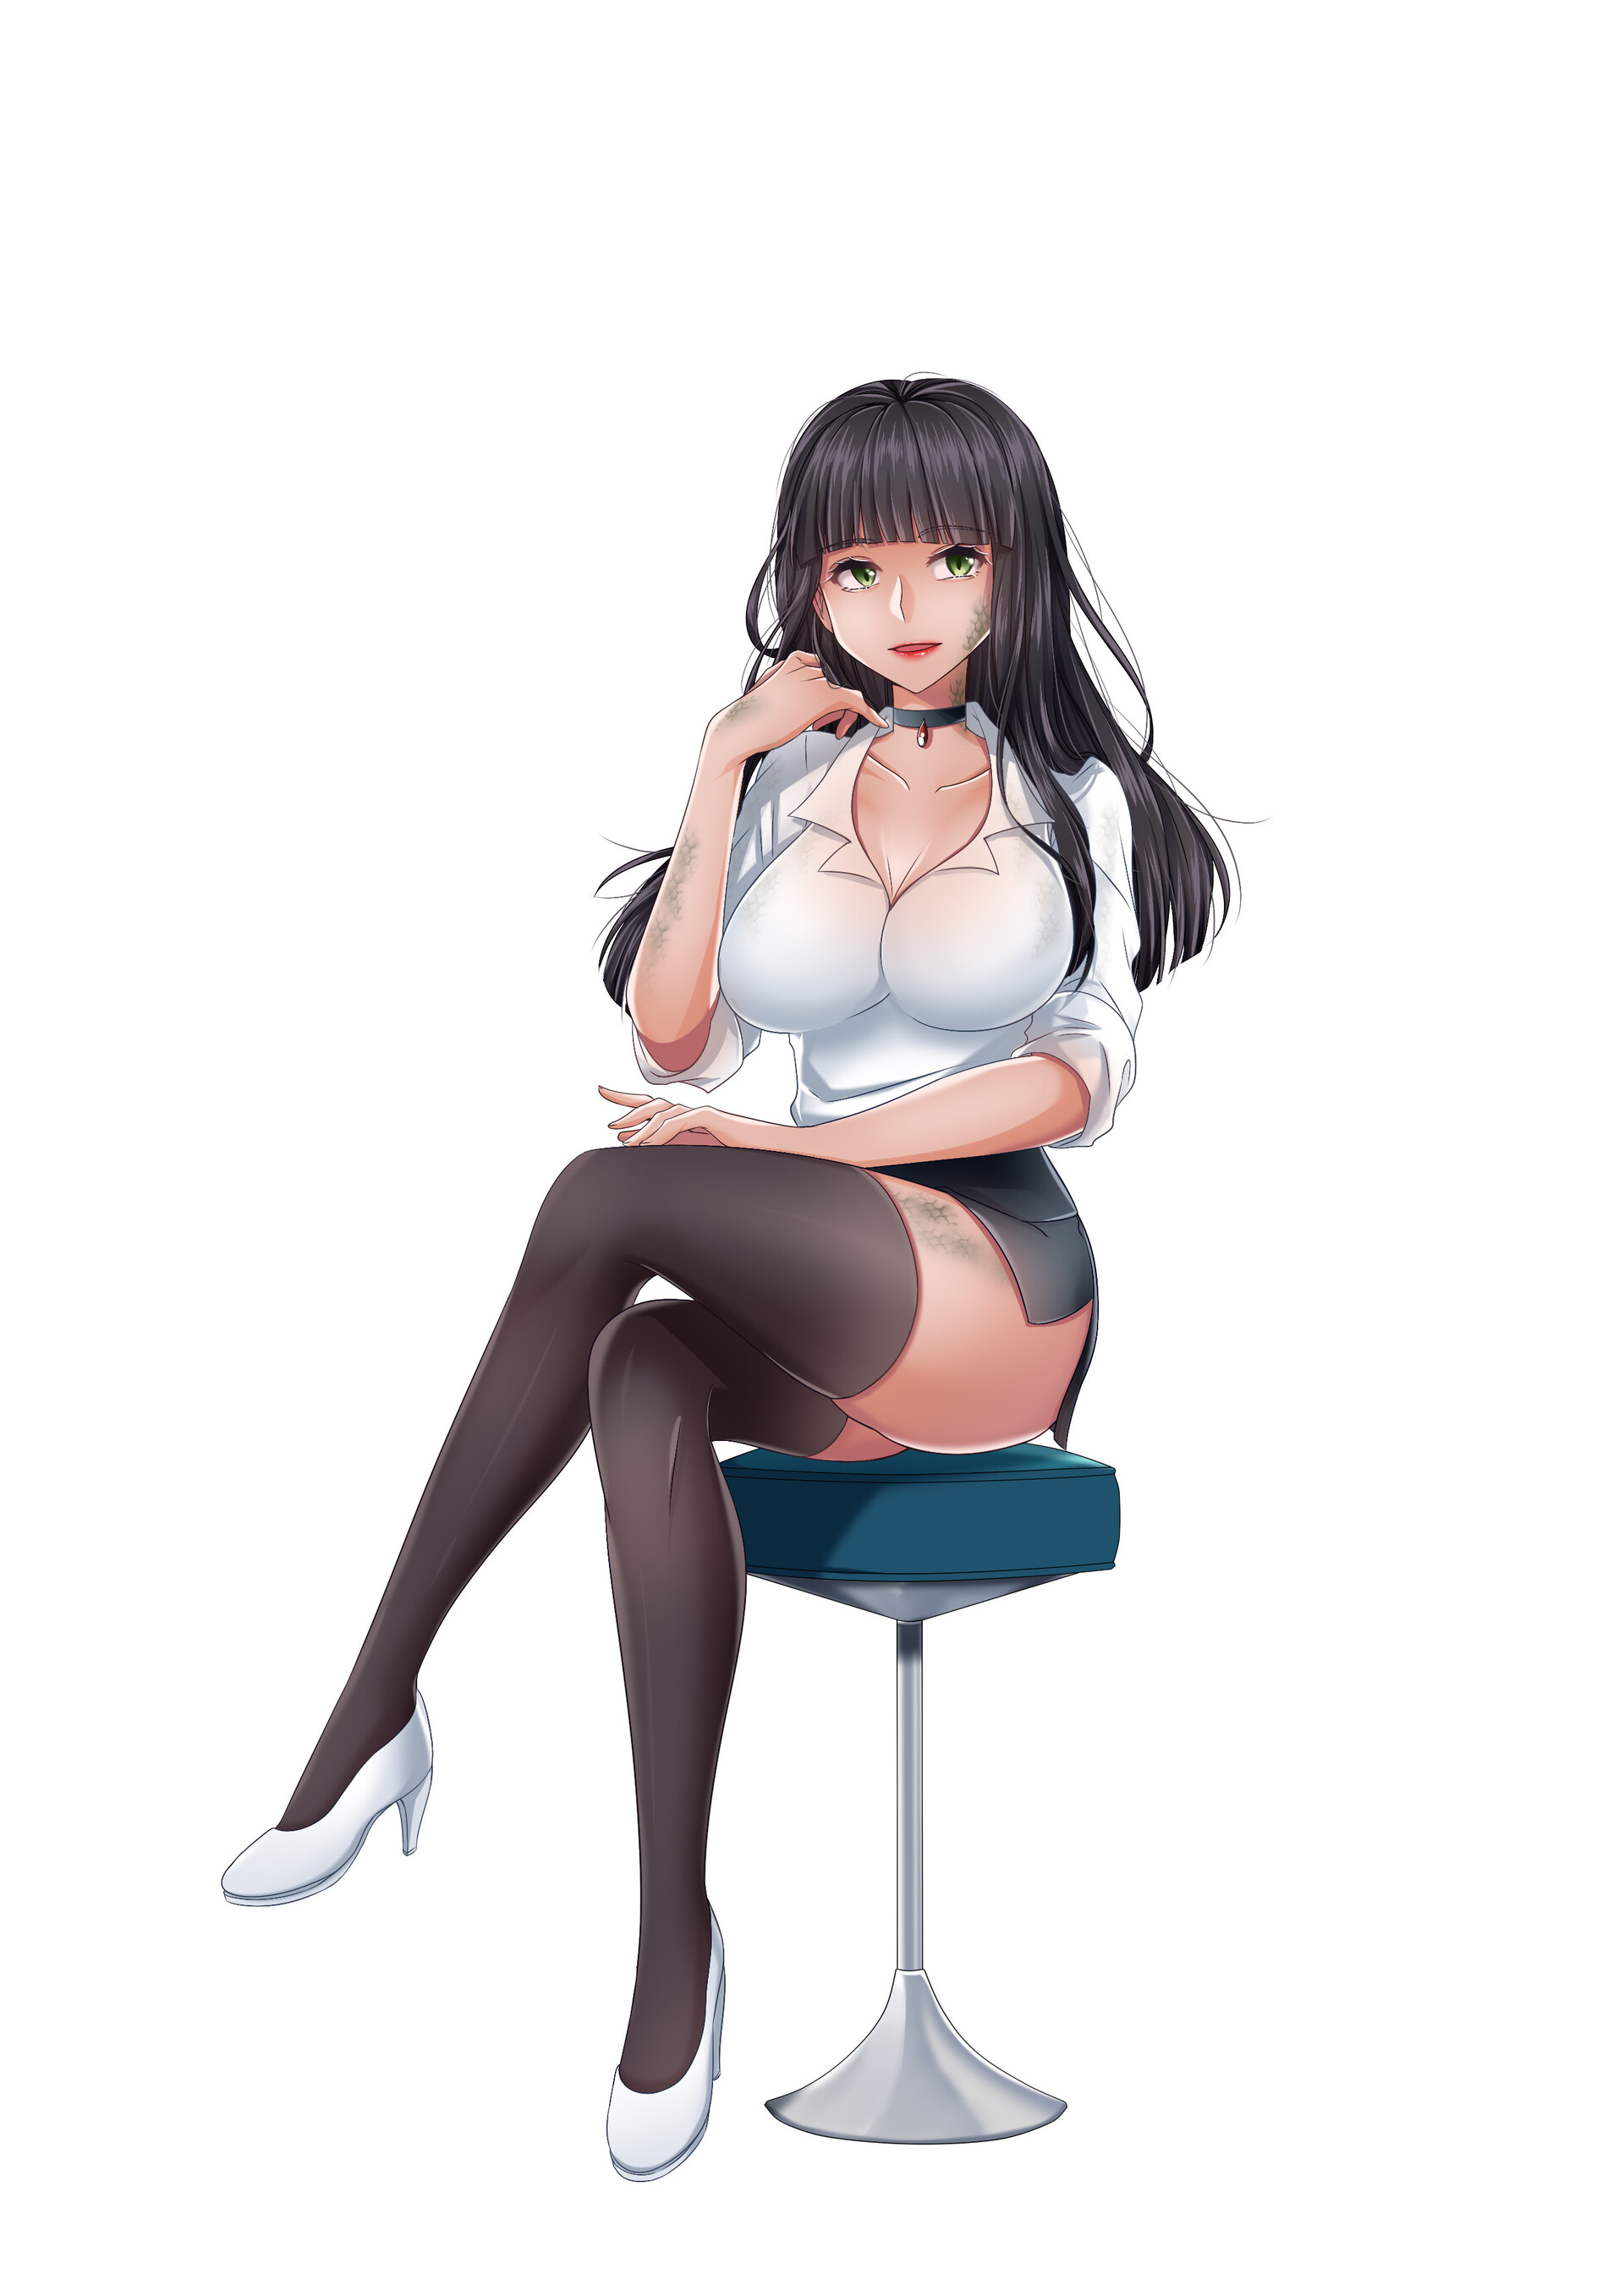 ArtStation - Sexy Girl Design Character Anime for Manga/Webtoon